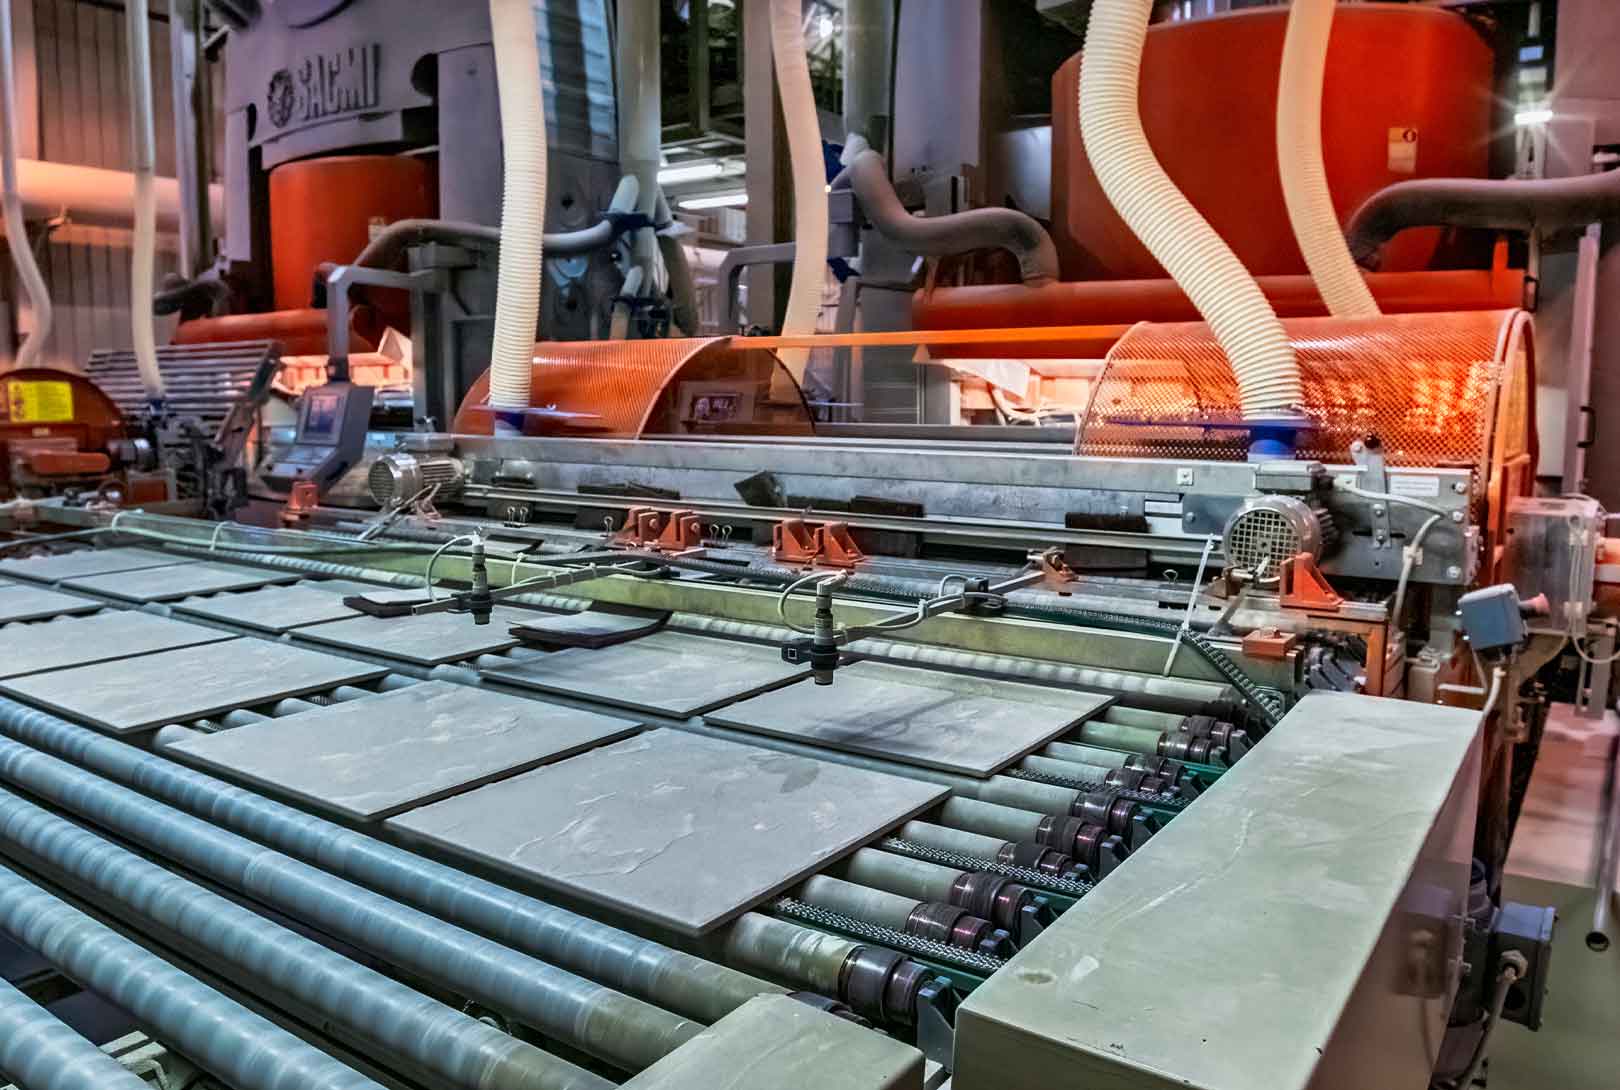 orange tile manufactiuring machine in a factory